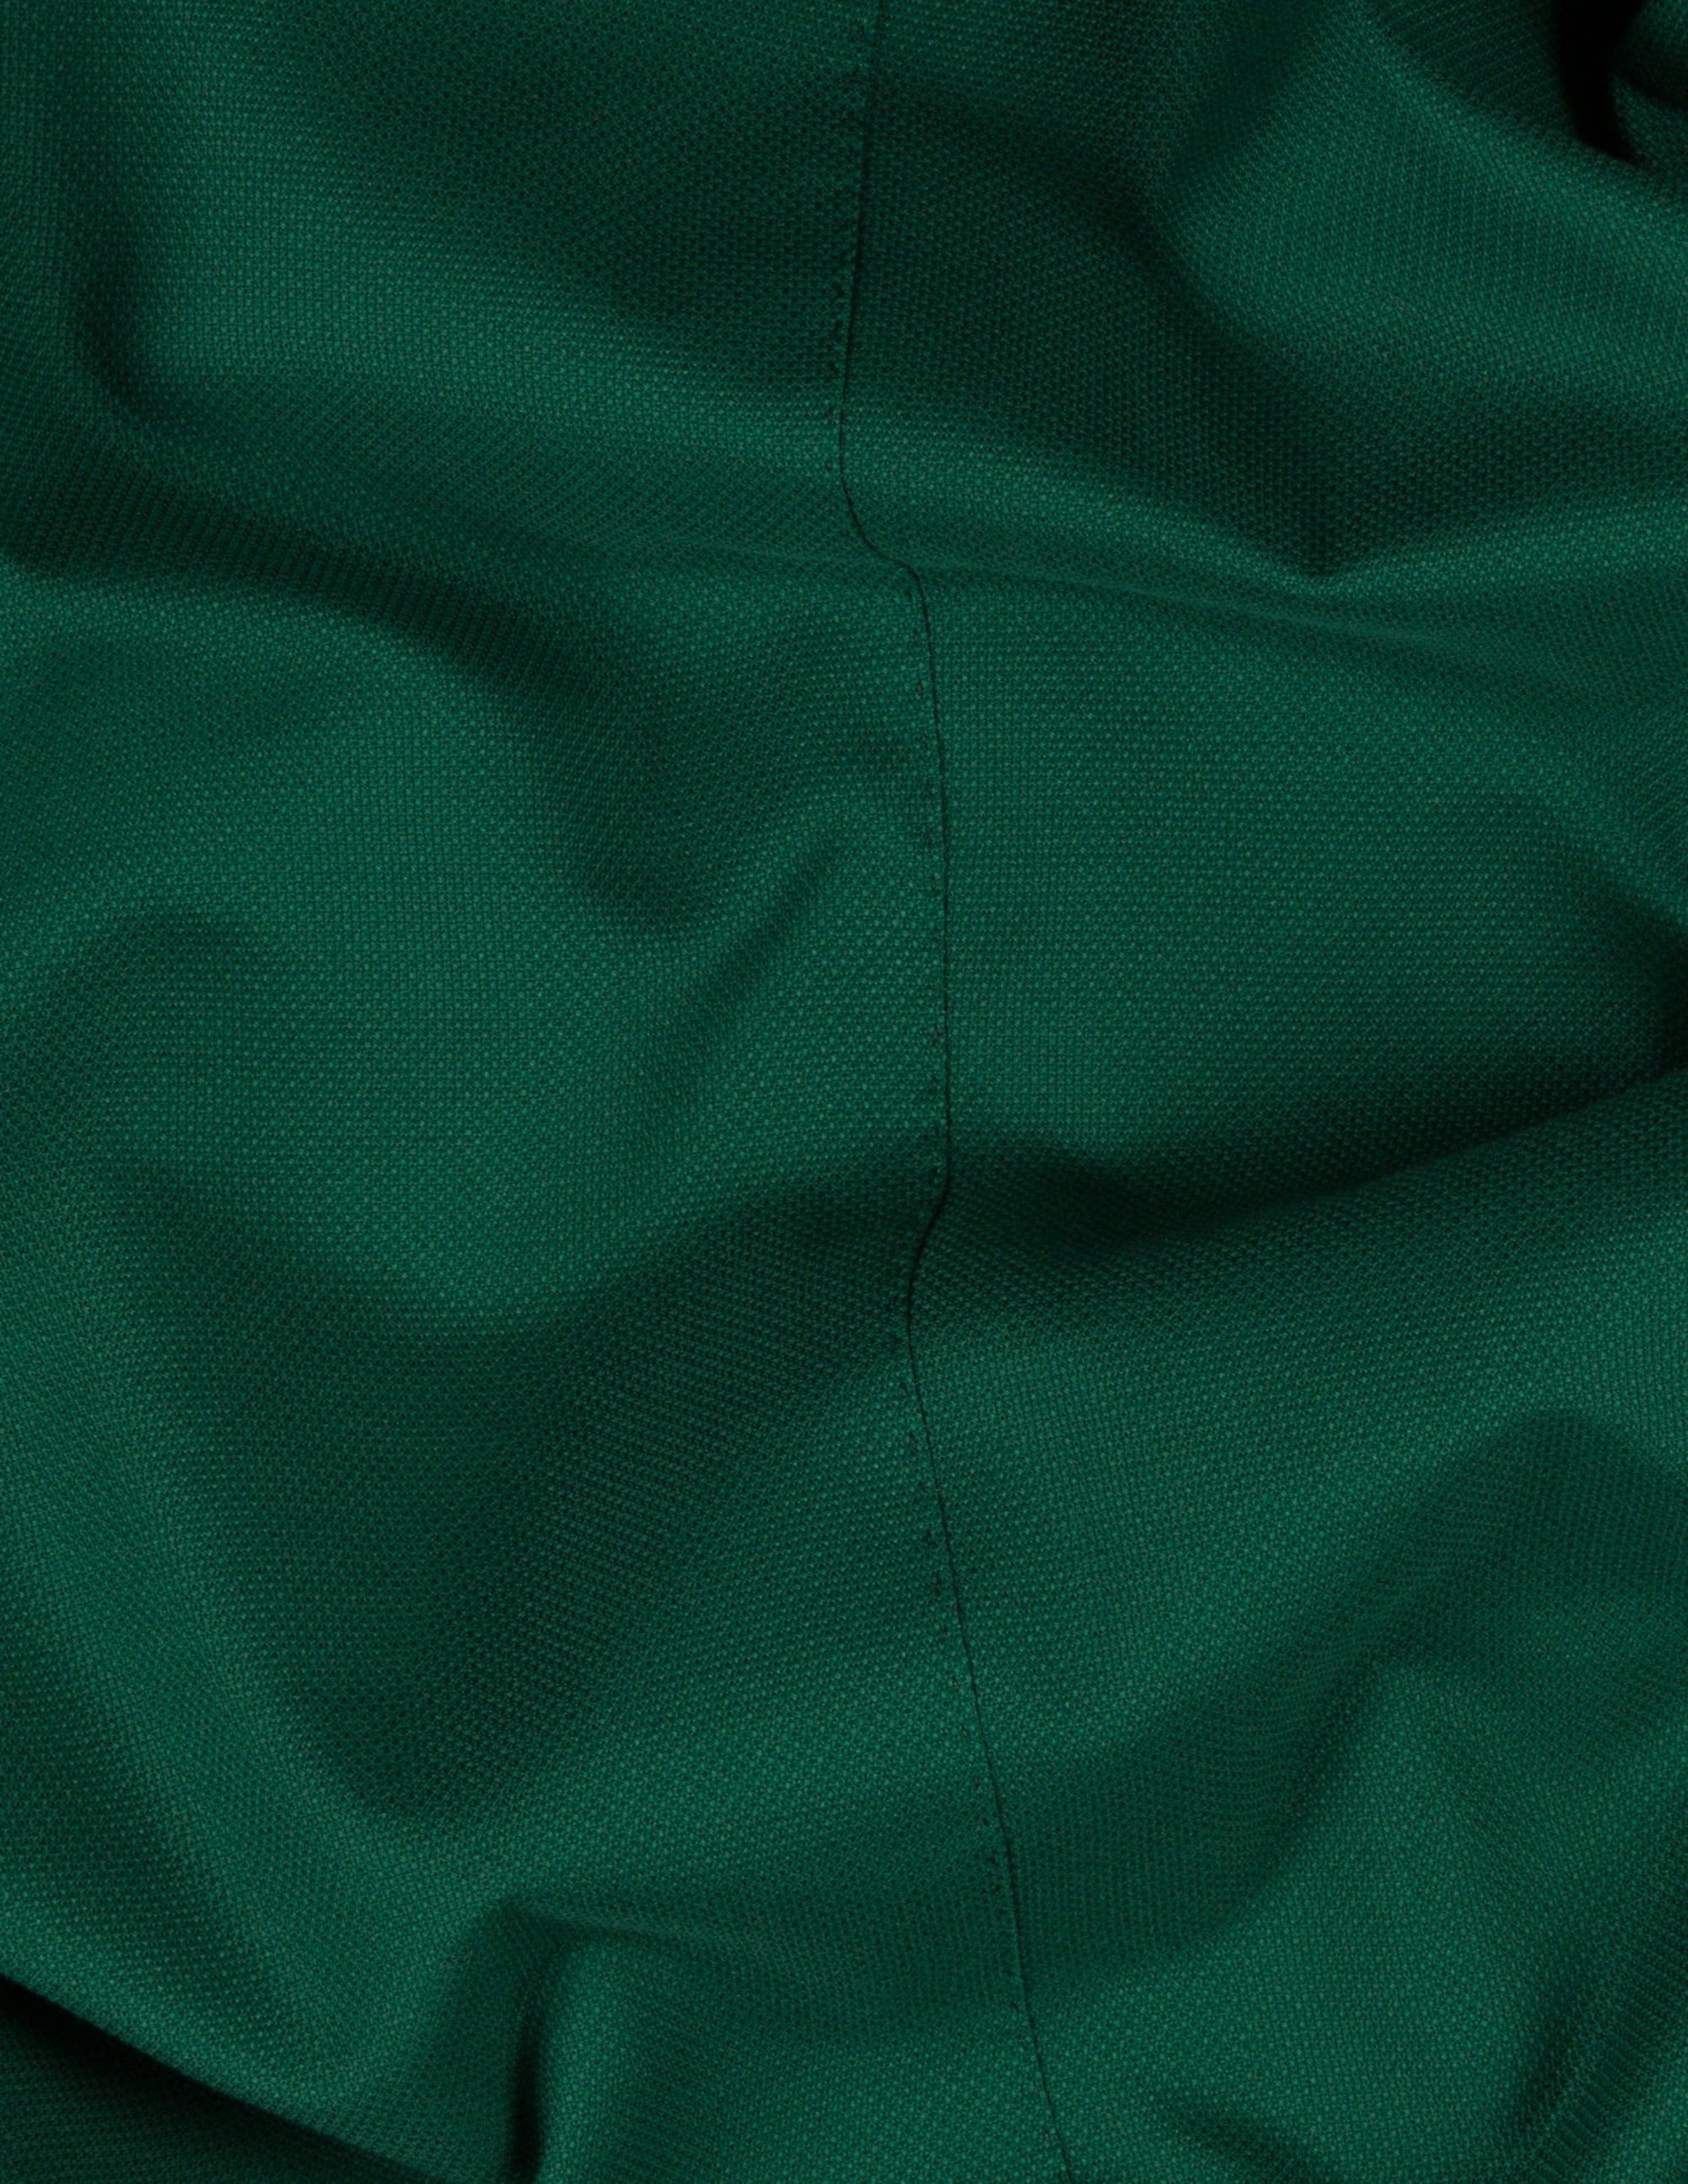 Green Double Breasted Jacket - Samir Bachkami